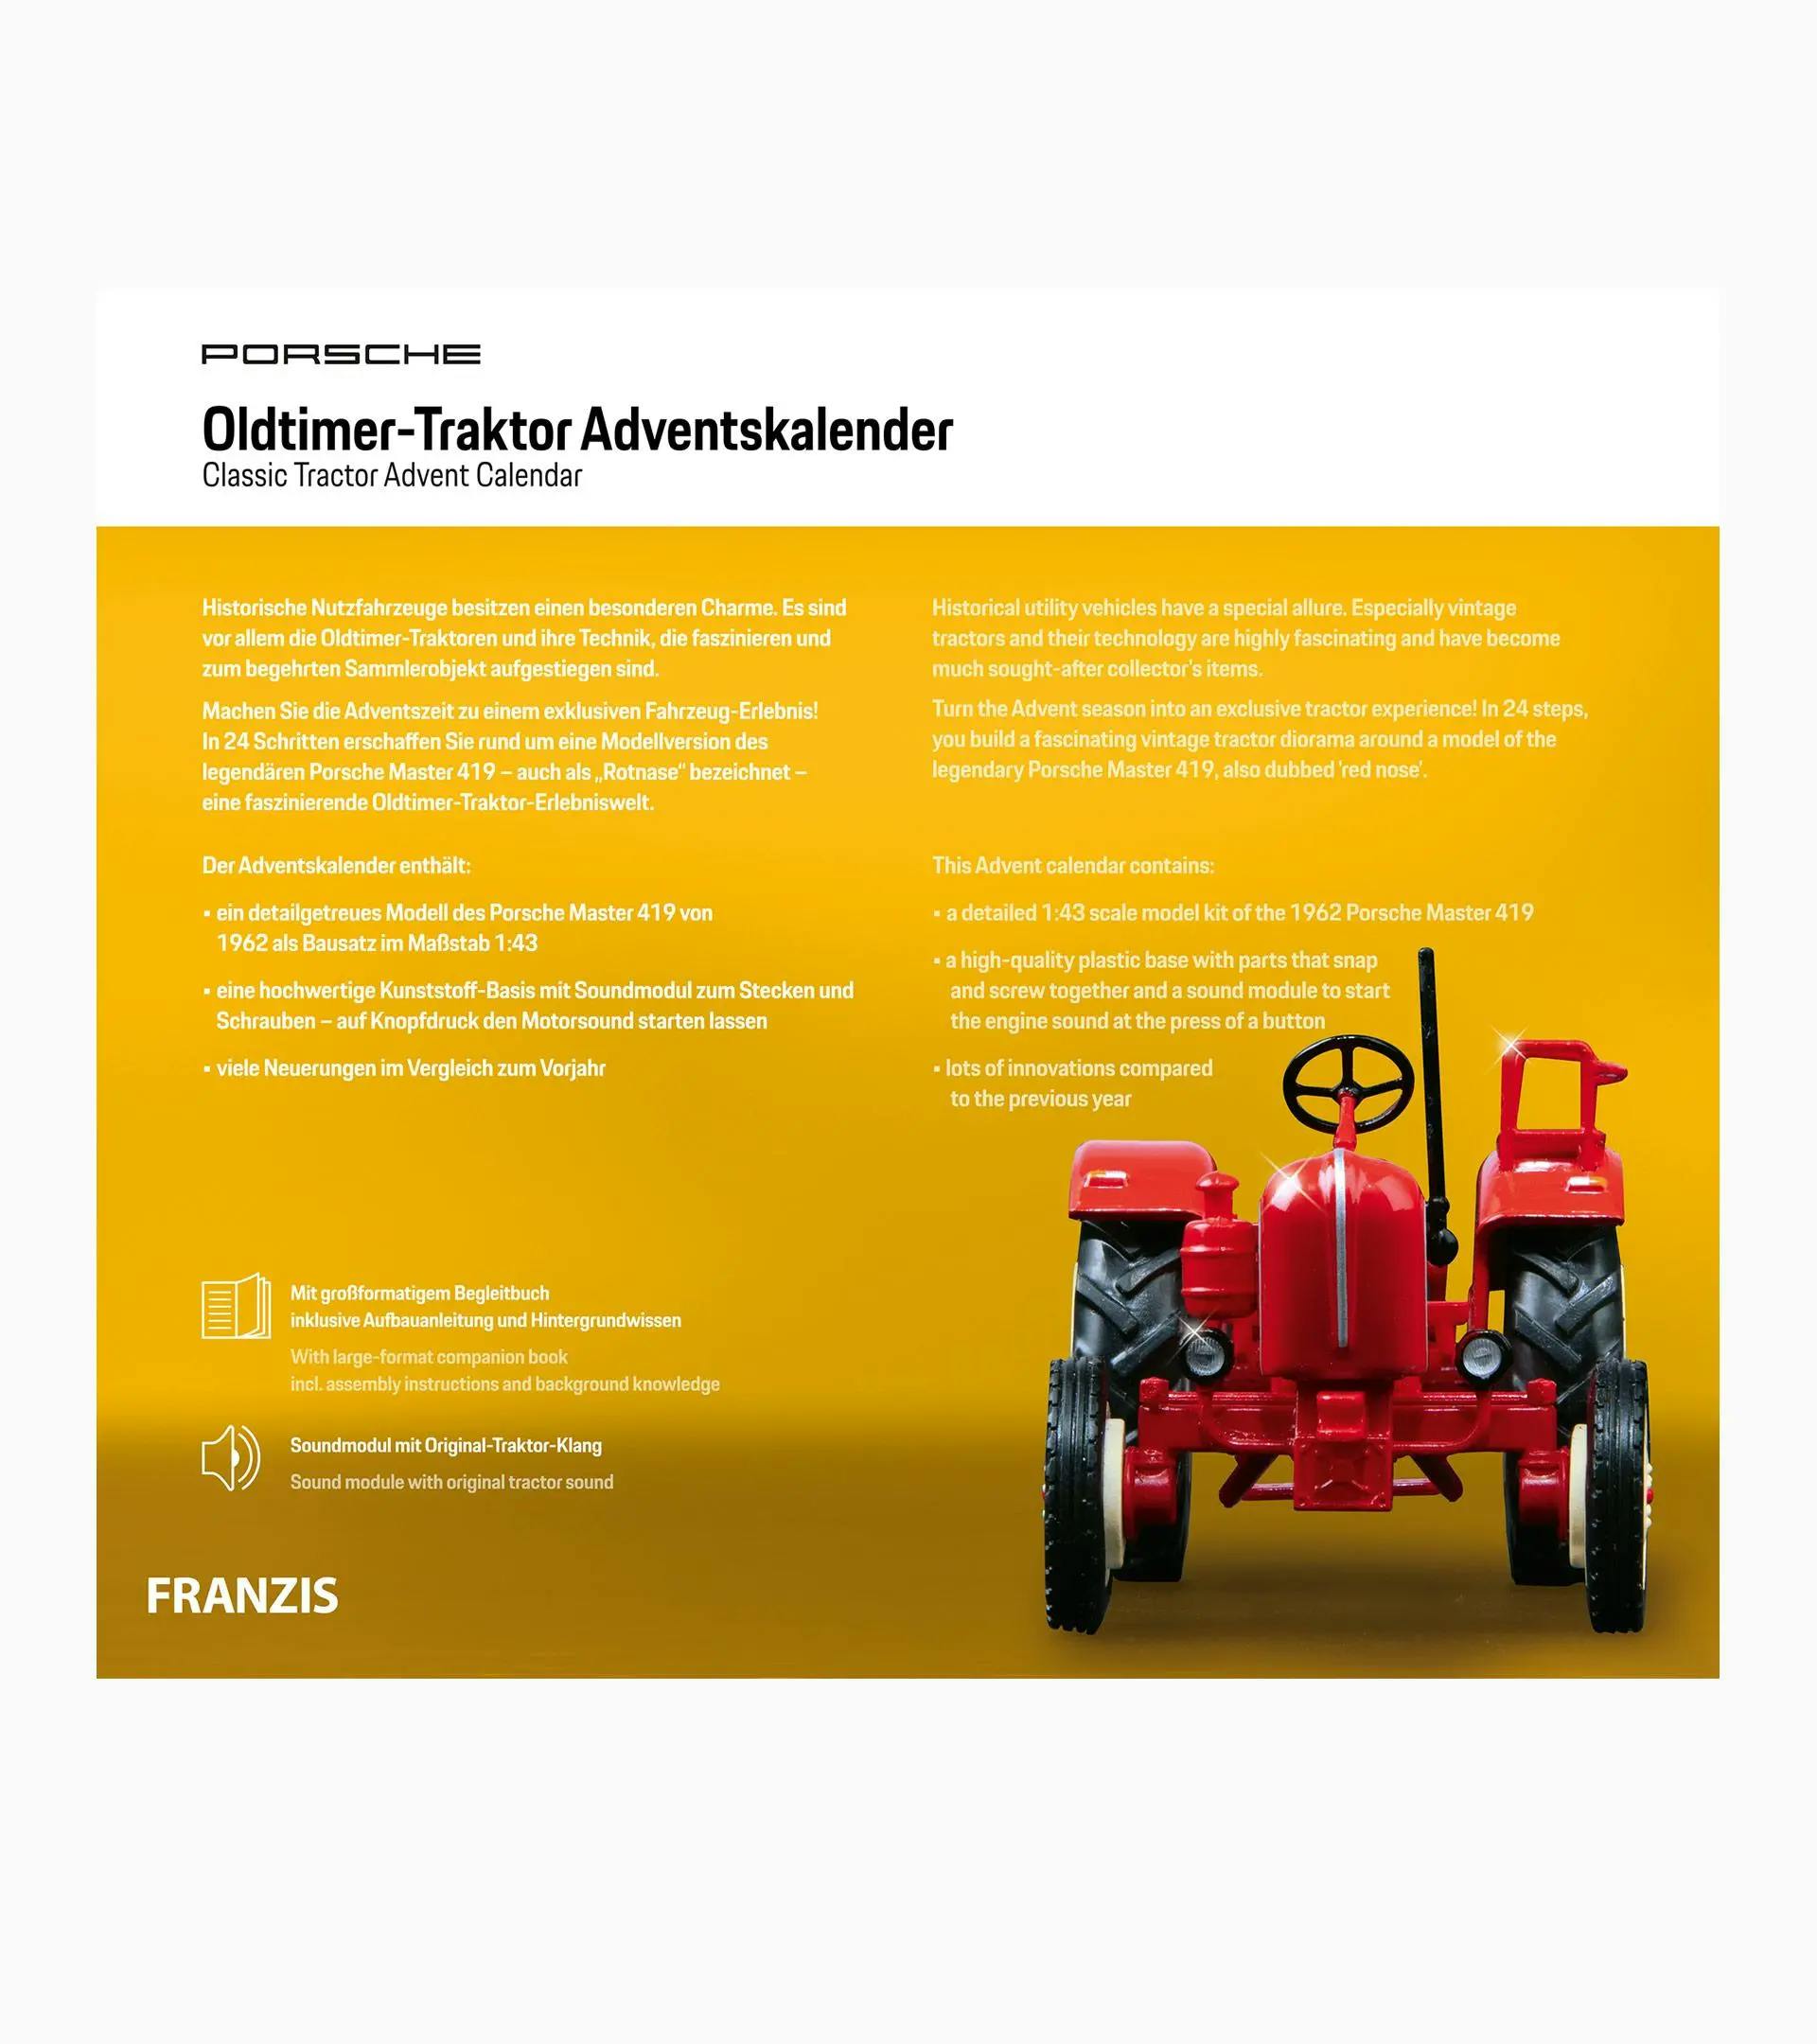 Porsche Oldtimer-Traktor Adventskalender 5